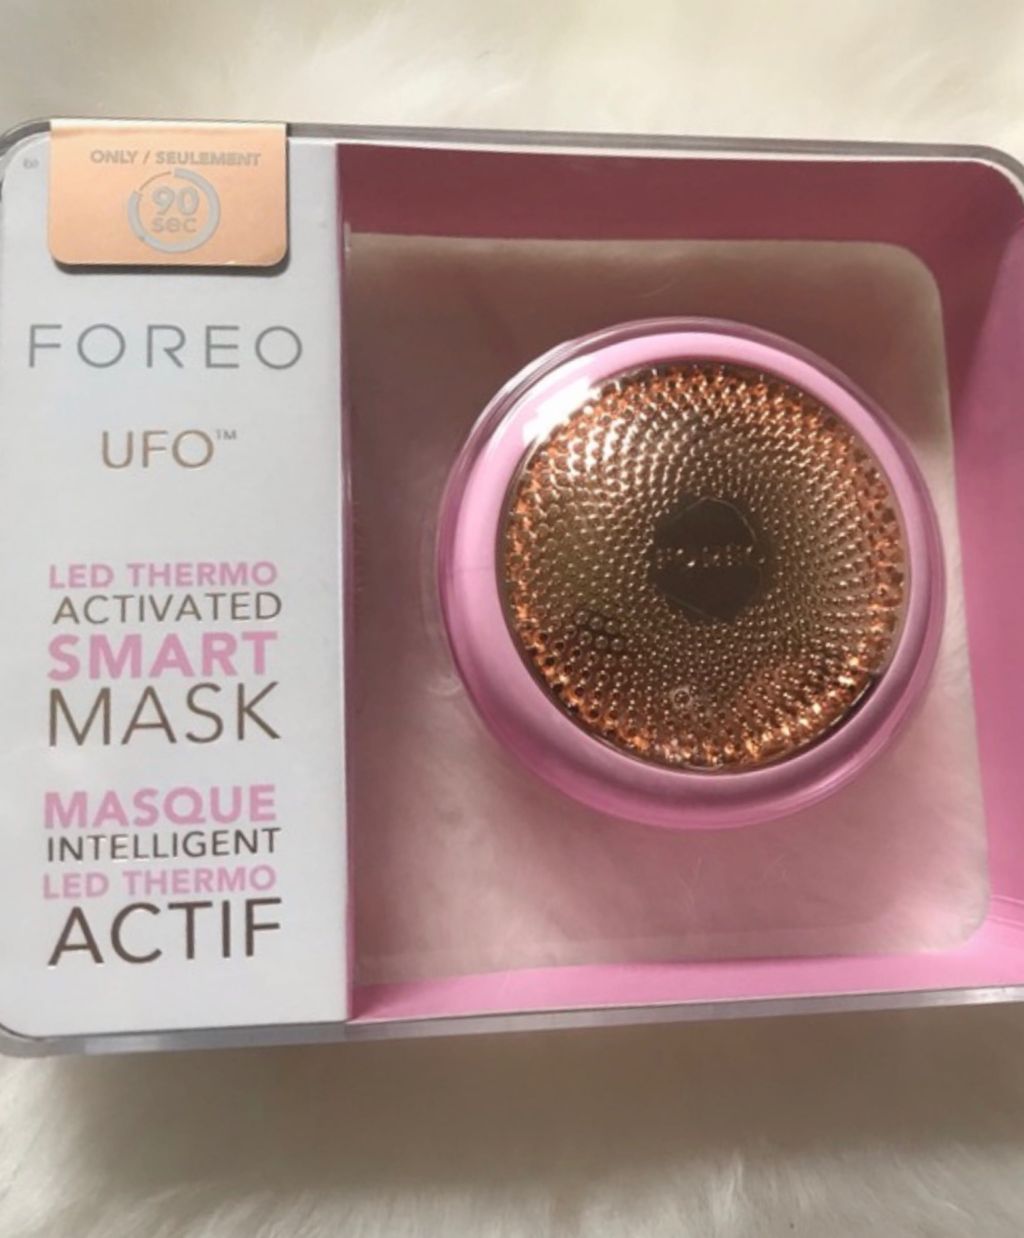 Foreo UFO smart mask